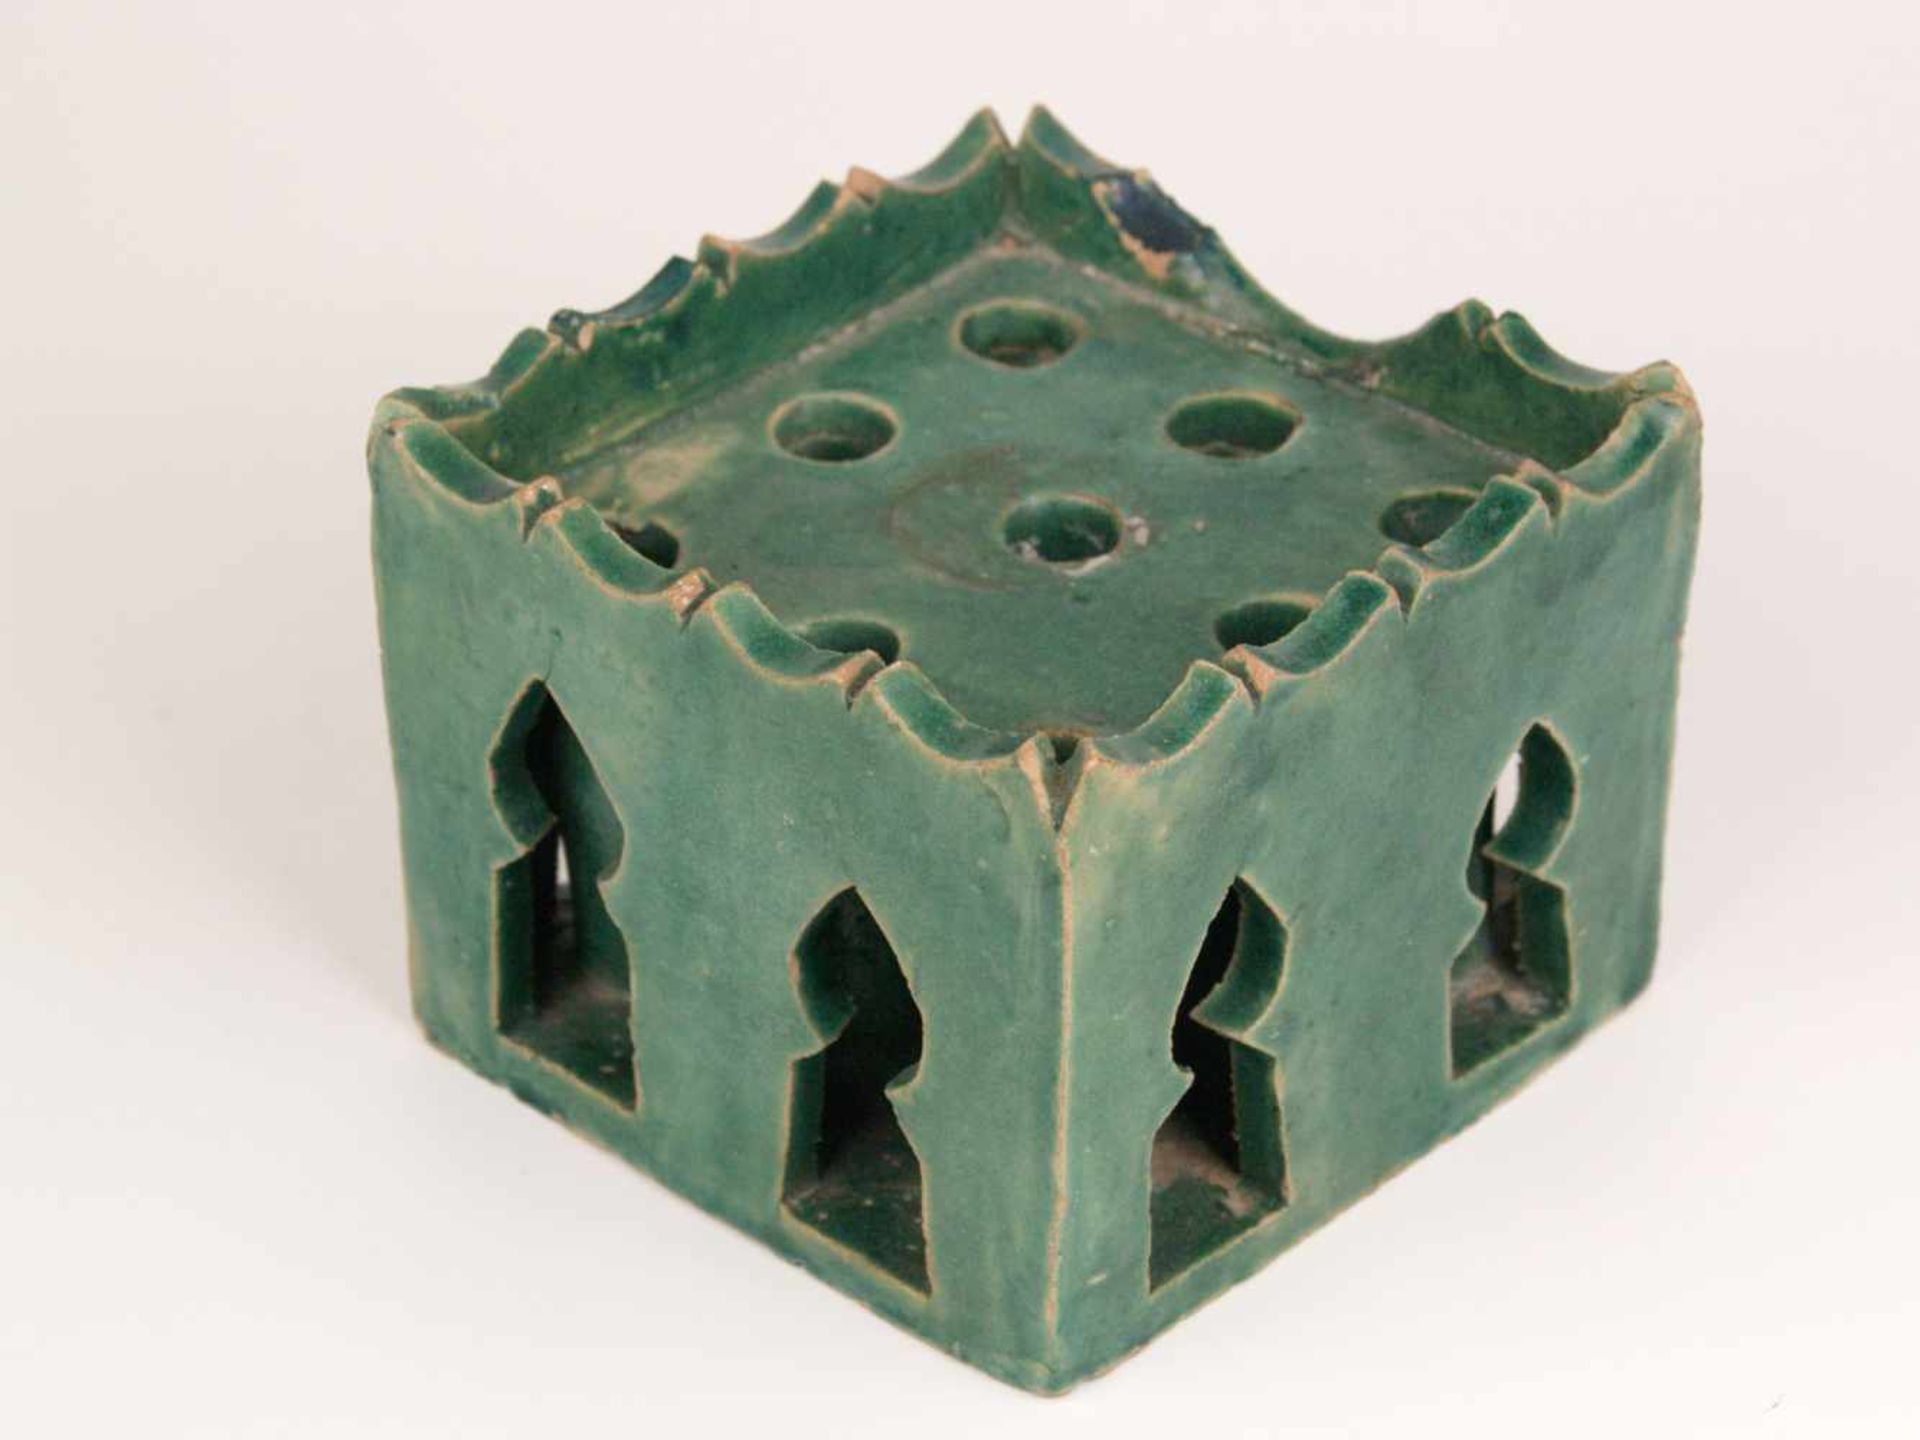 Steckvase - Marokko, Berber-Keramik, grüner Scherben, rechteckiger Korpus, Wandung durchbrochen